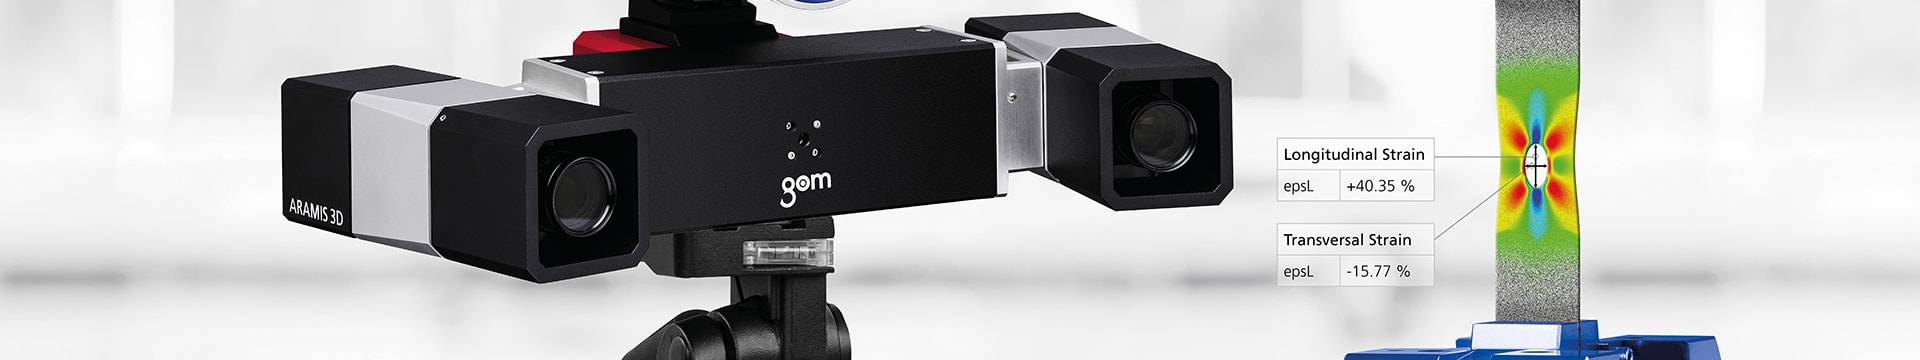 GOM Tensile Test with ARAMIS 3D Camera